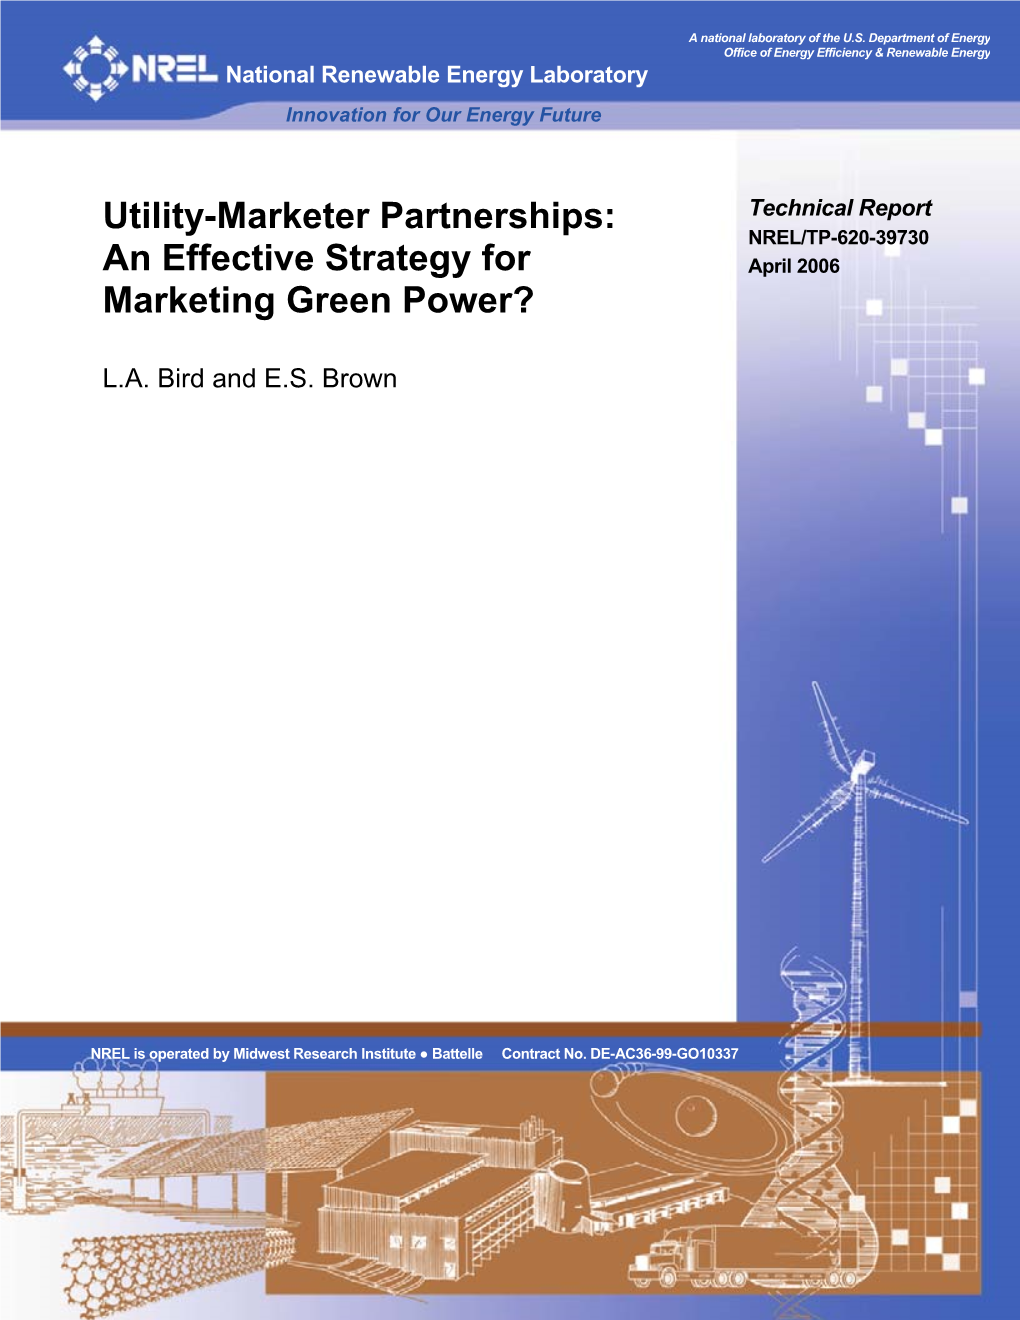 Utility-Marketer Partnerships: an Effective Strategy for Marketing DE-AC36-99-GO10337 Green Power? 5B